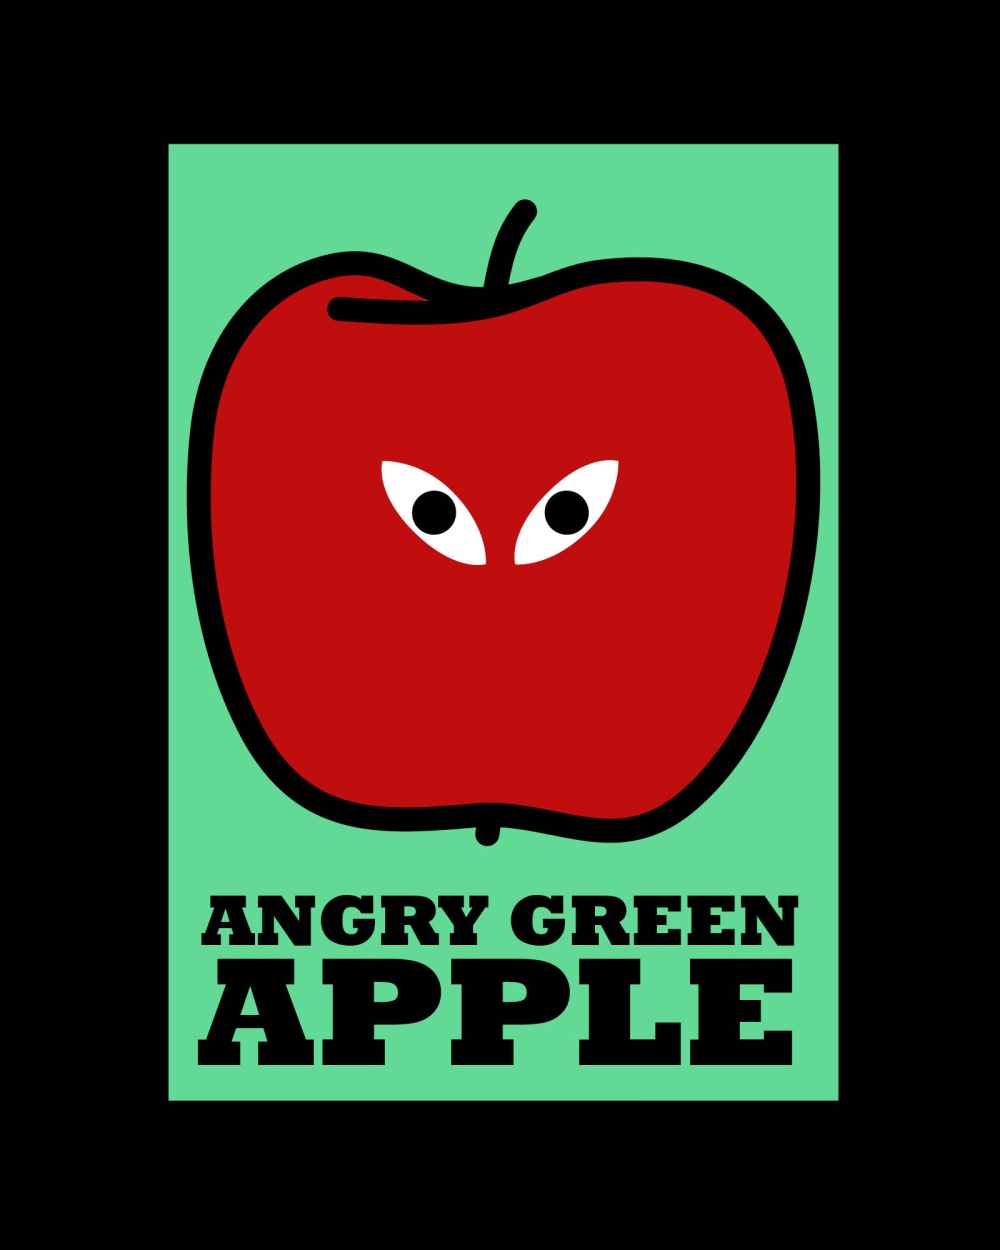 Angry green apple